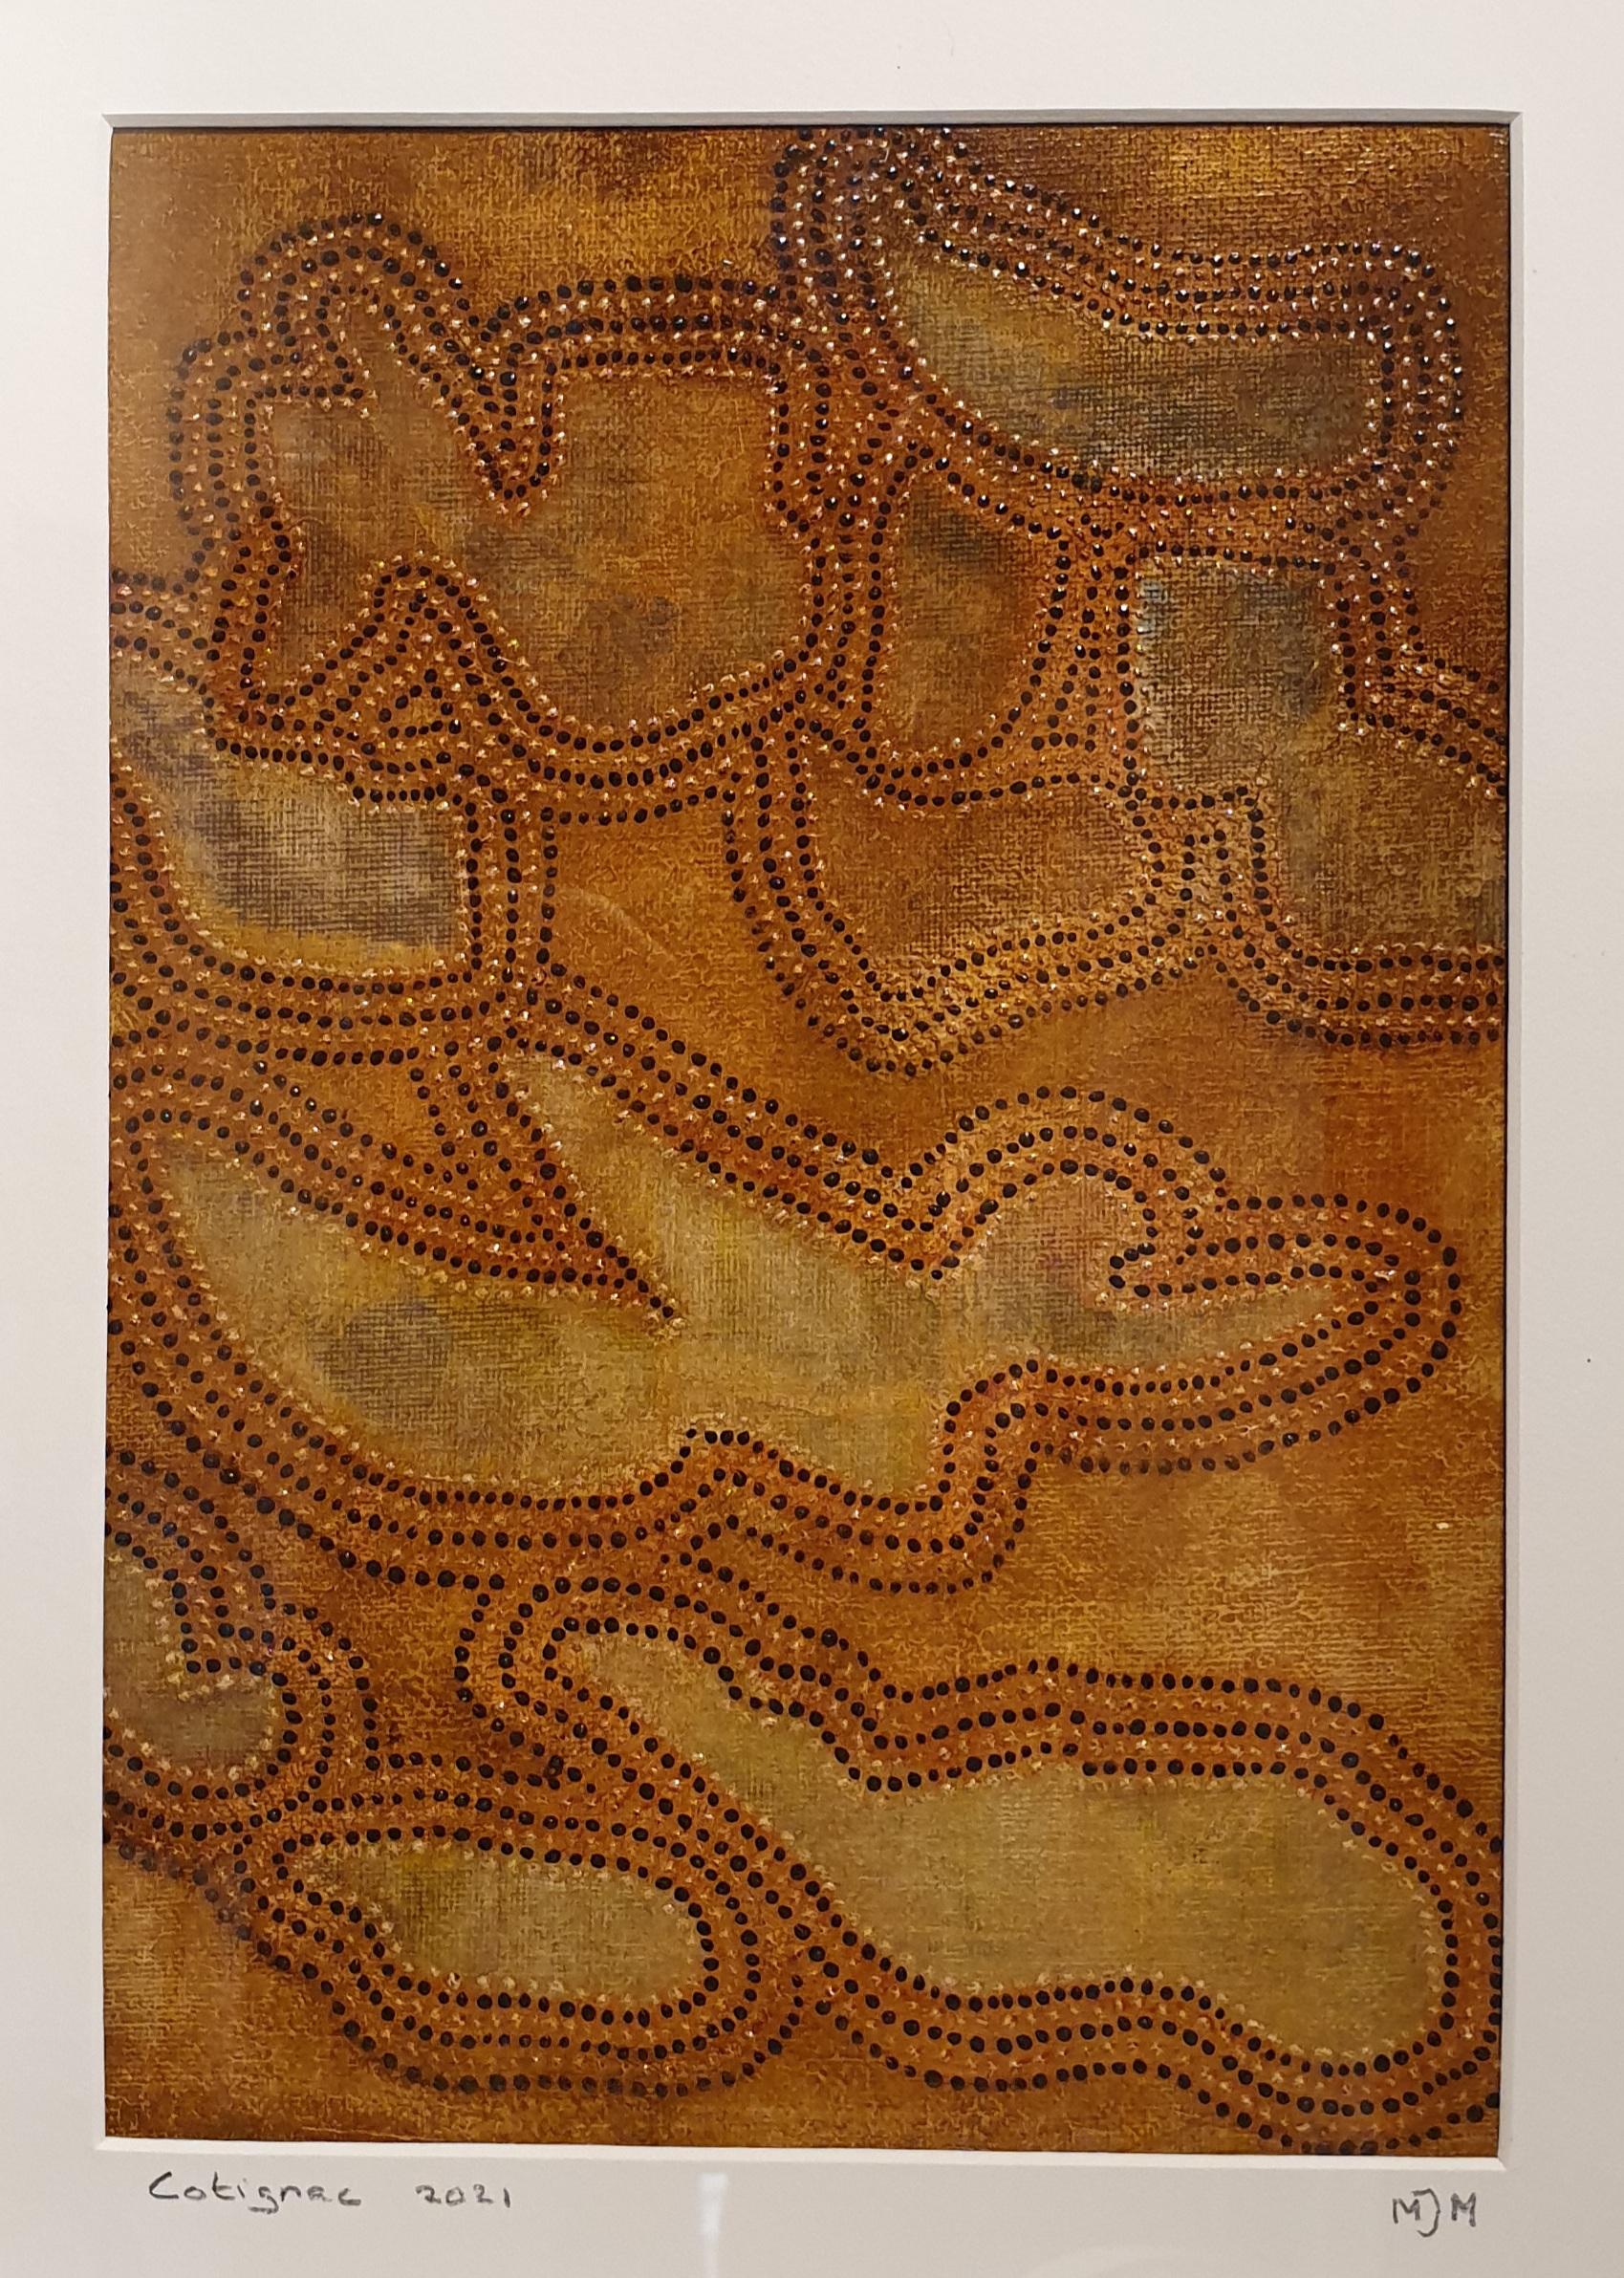 Abstract Painting Menno Modderman - Abstrait contemporain d'inspiration aborigène.